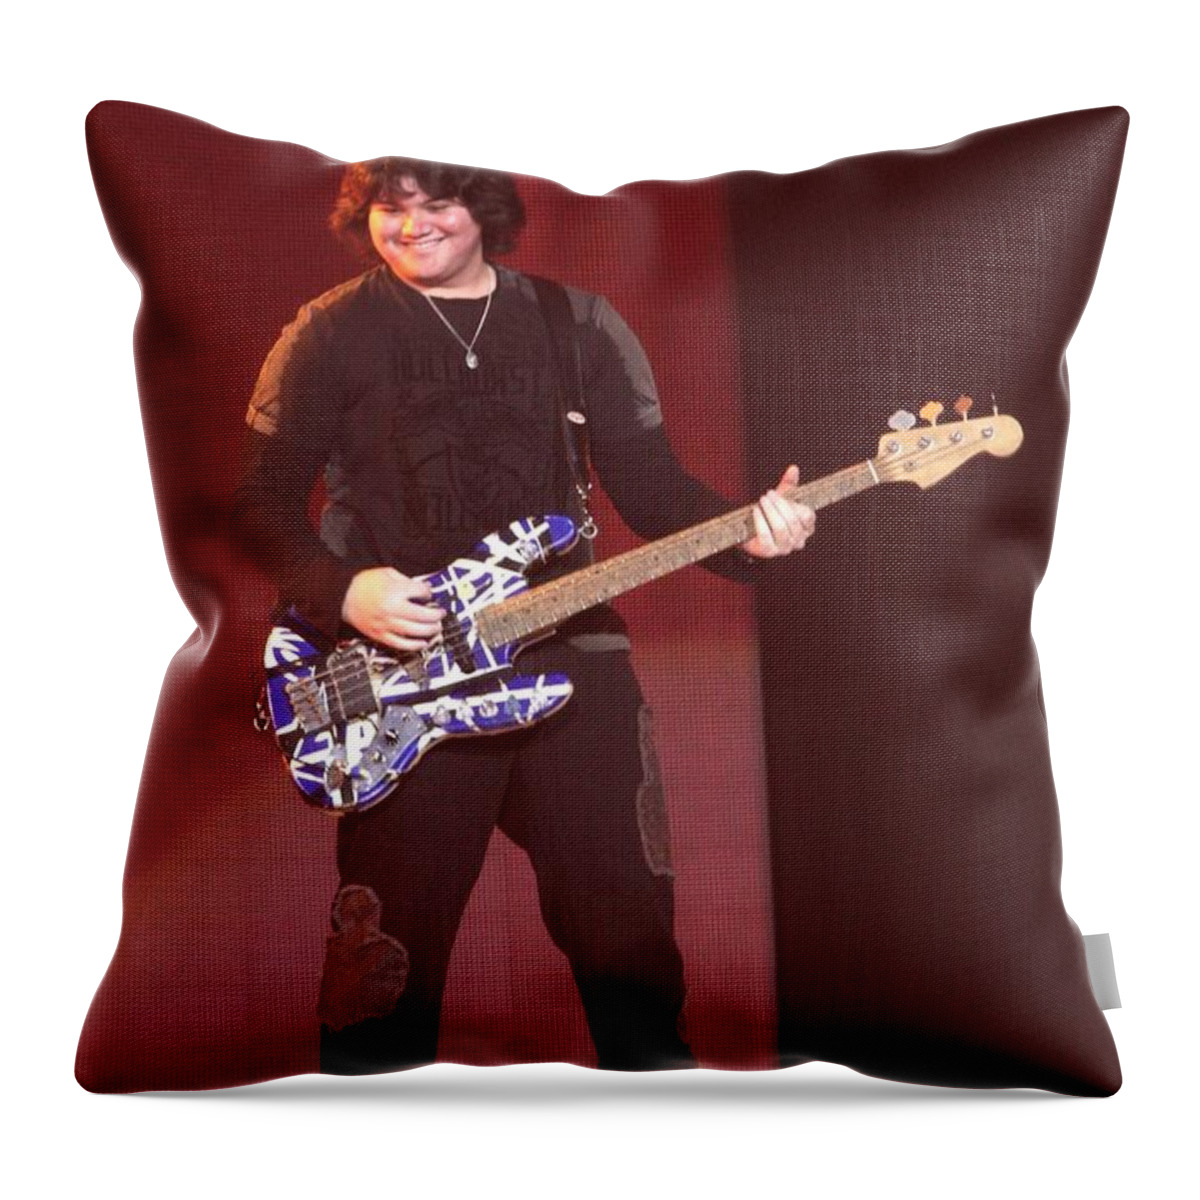 Musician Throw Pillow featuring the photograph Wolfgang Van Halen by Concert Photos